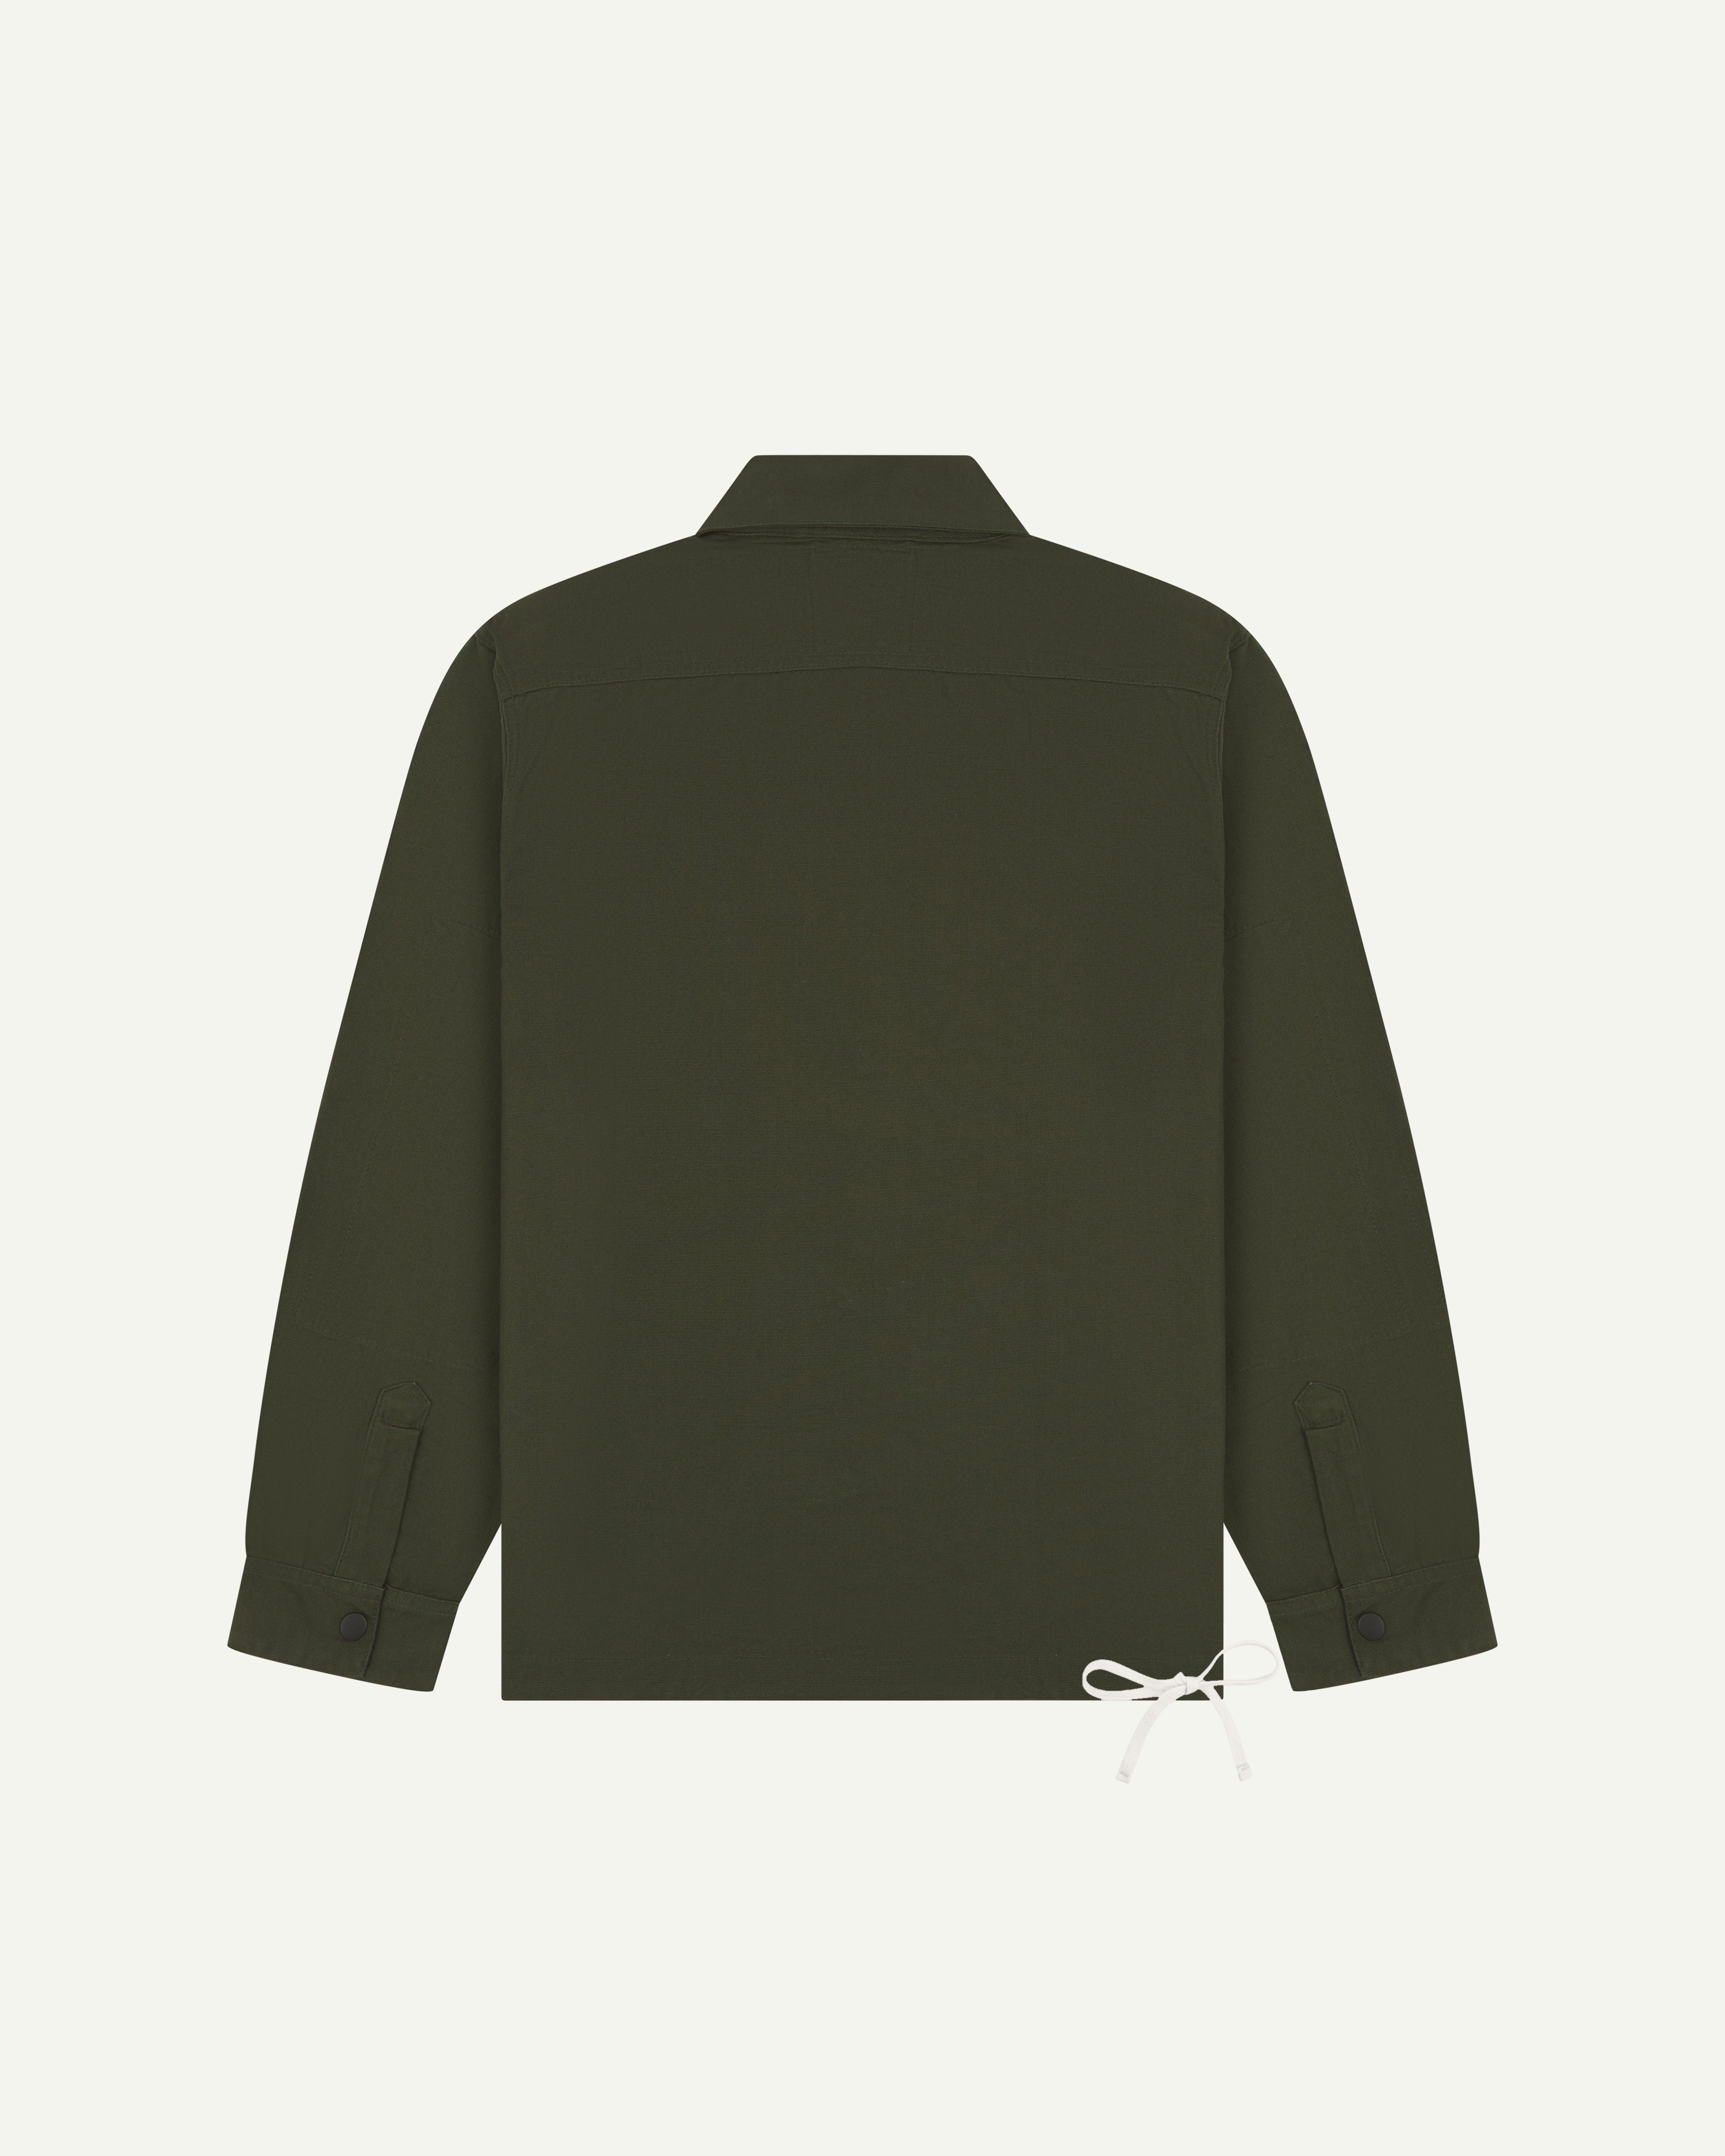 flat back shot of uskees dark green coach jacket showing adjustable cream drawstring base